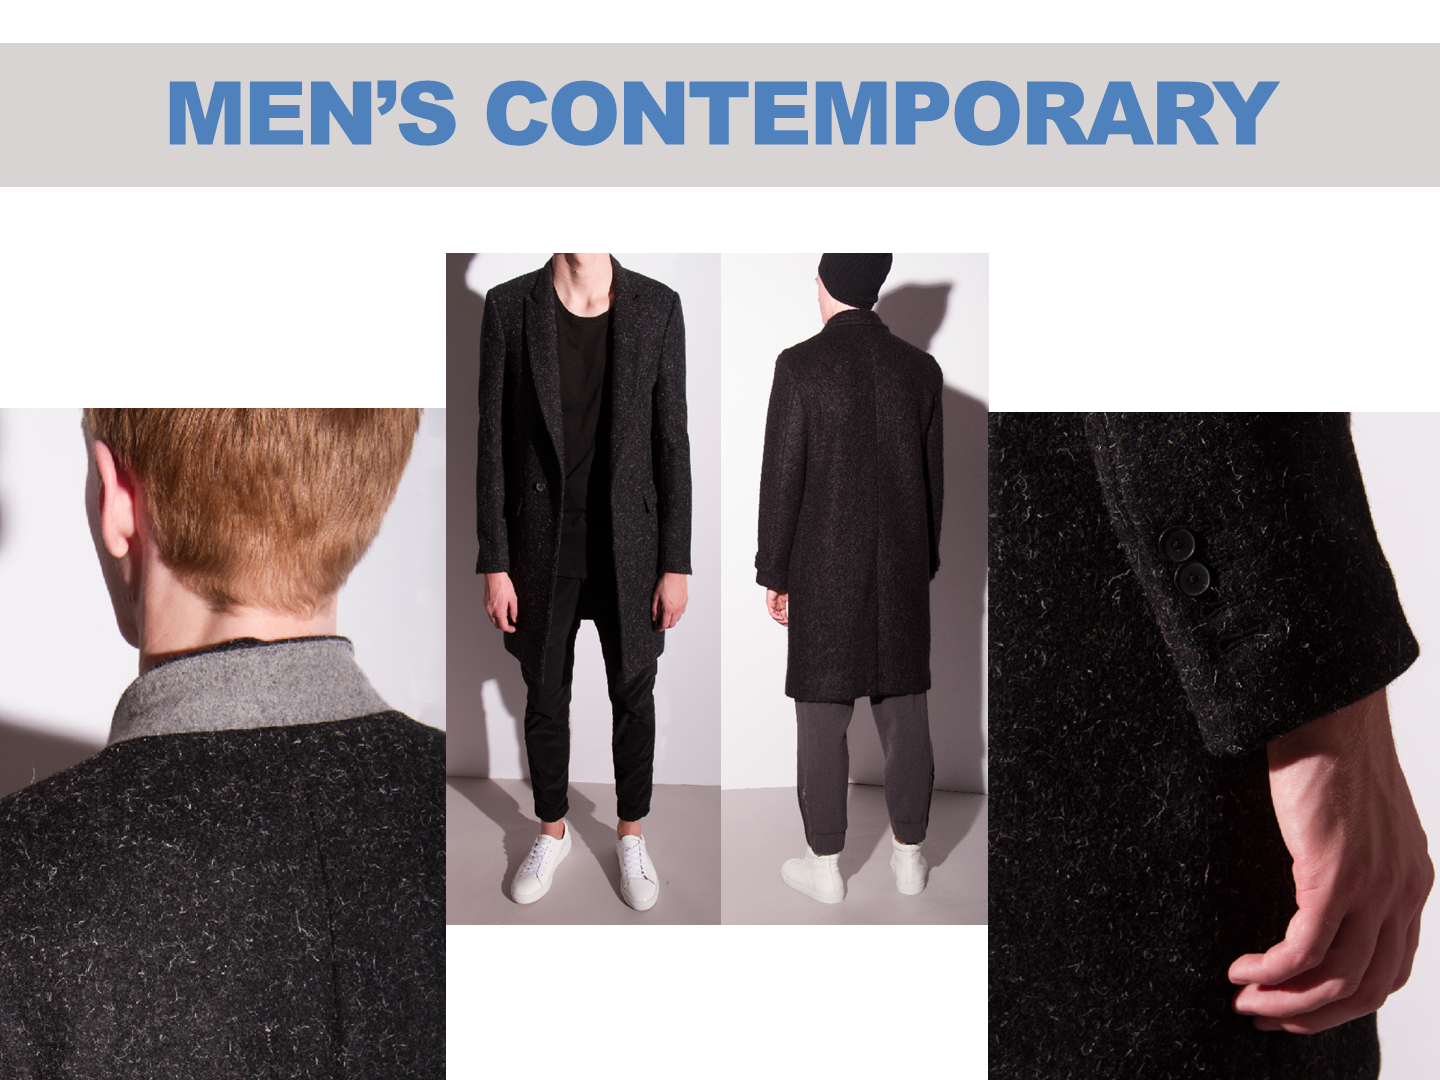 HUMAN B CLIENT Presentation - Men's Contemporary 2.png